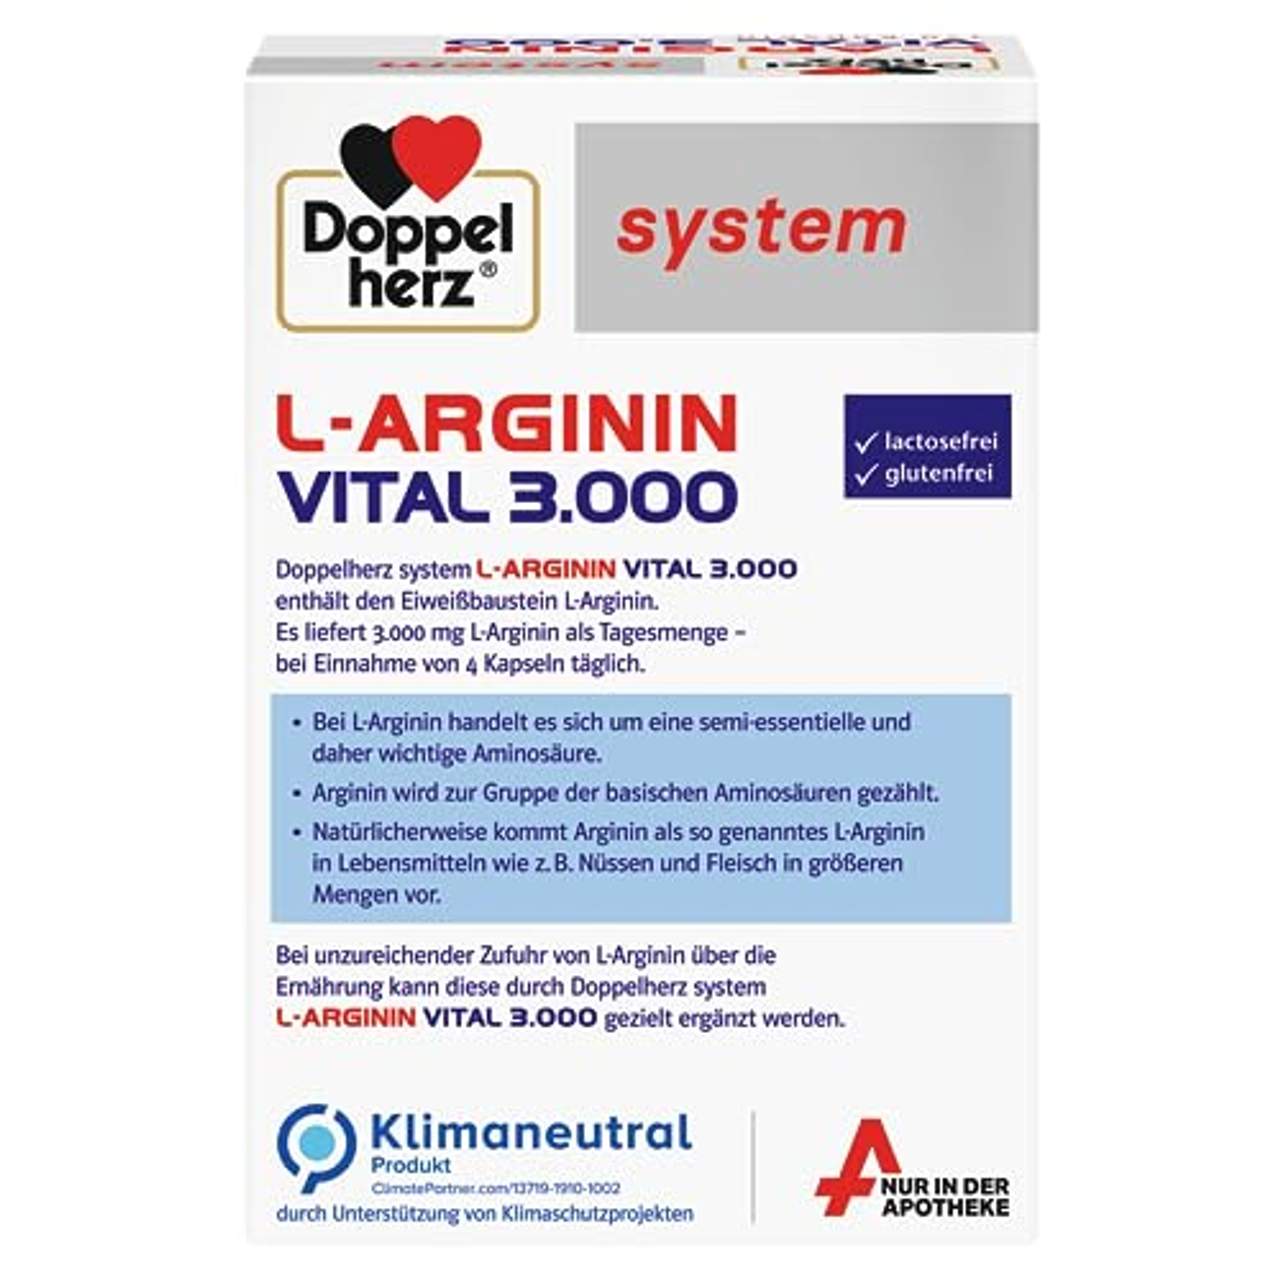 Doppelherz system L-ARGININ Vital 3.000